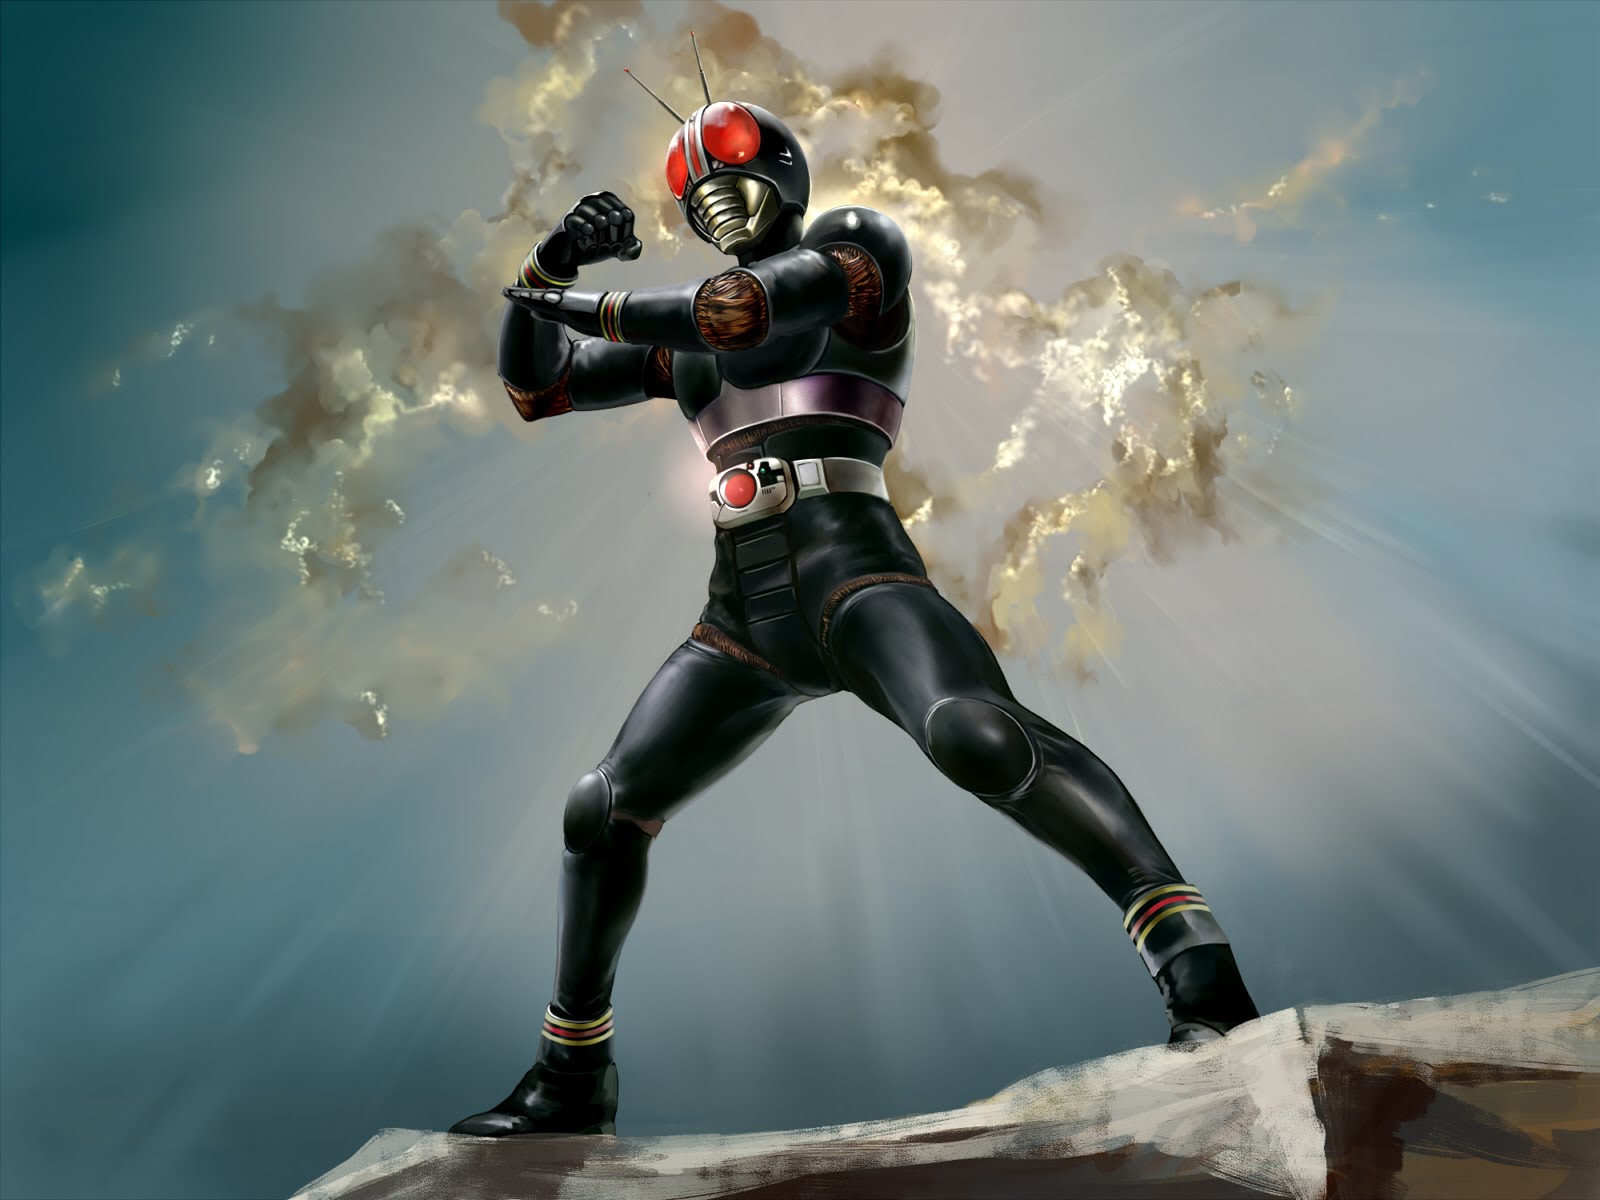 kamen rider wallpaper,fictional character,games,screenshot,superhero,action figure